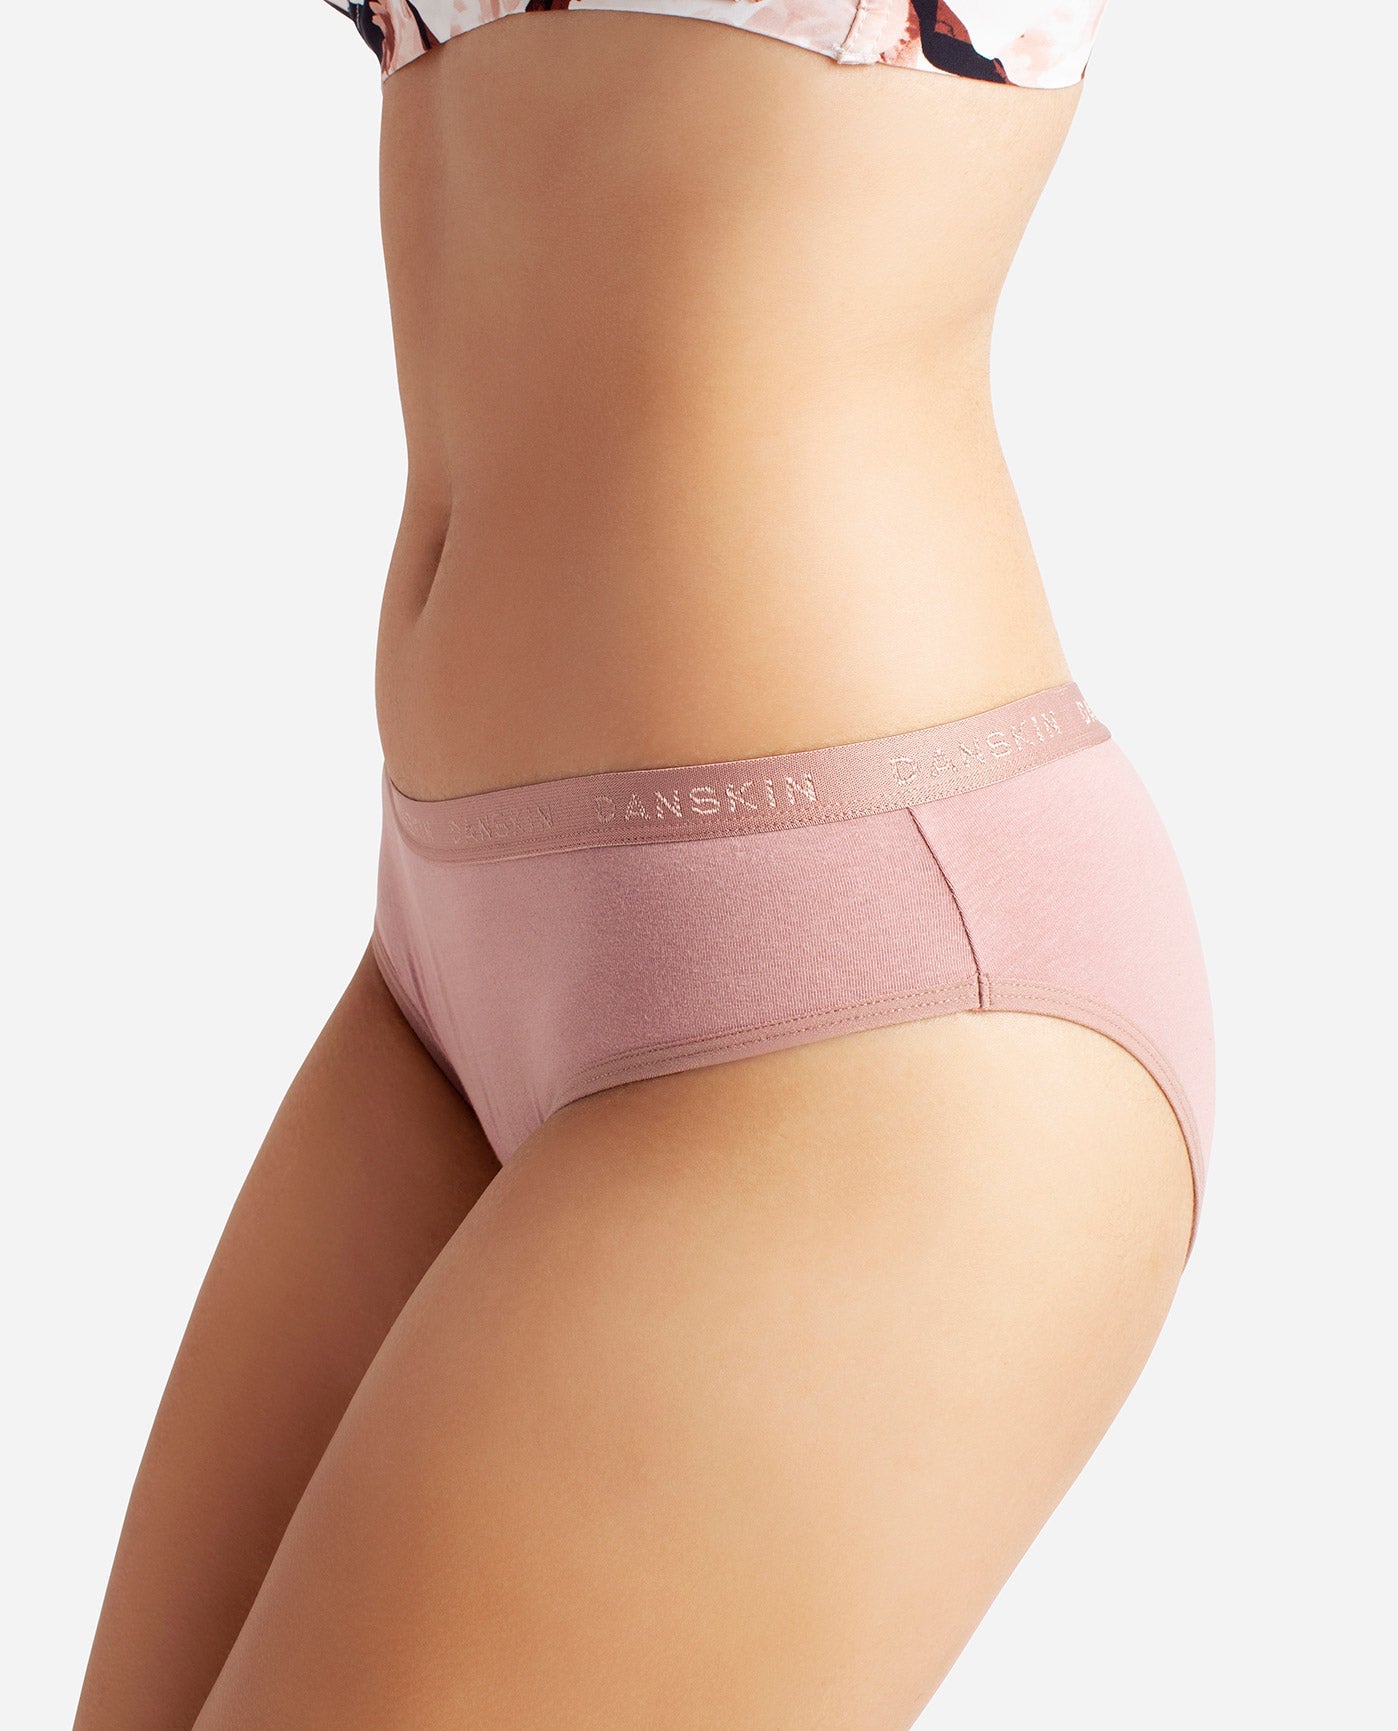 Danskin Assorted Bikini Underwear - Pack of 5 - ShopStyle Panties